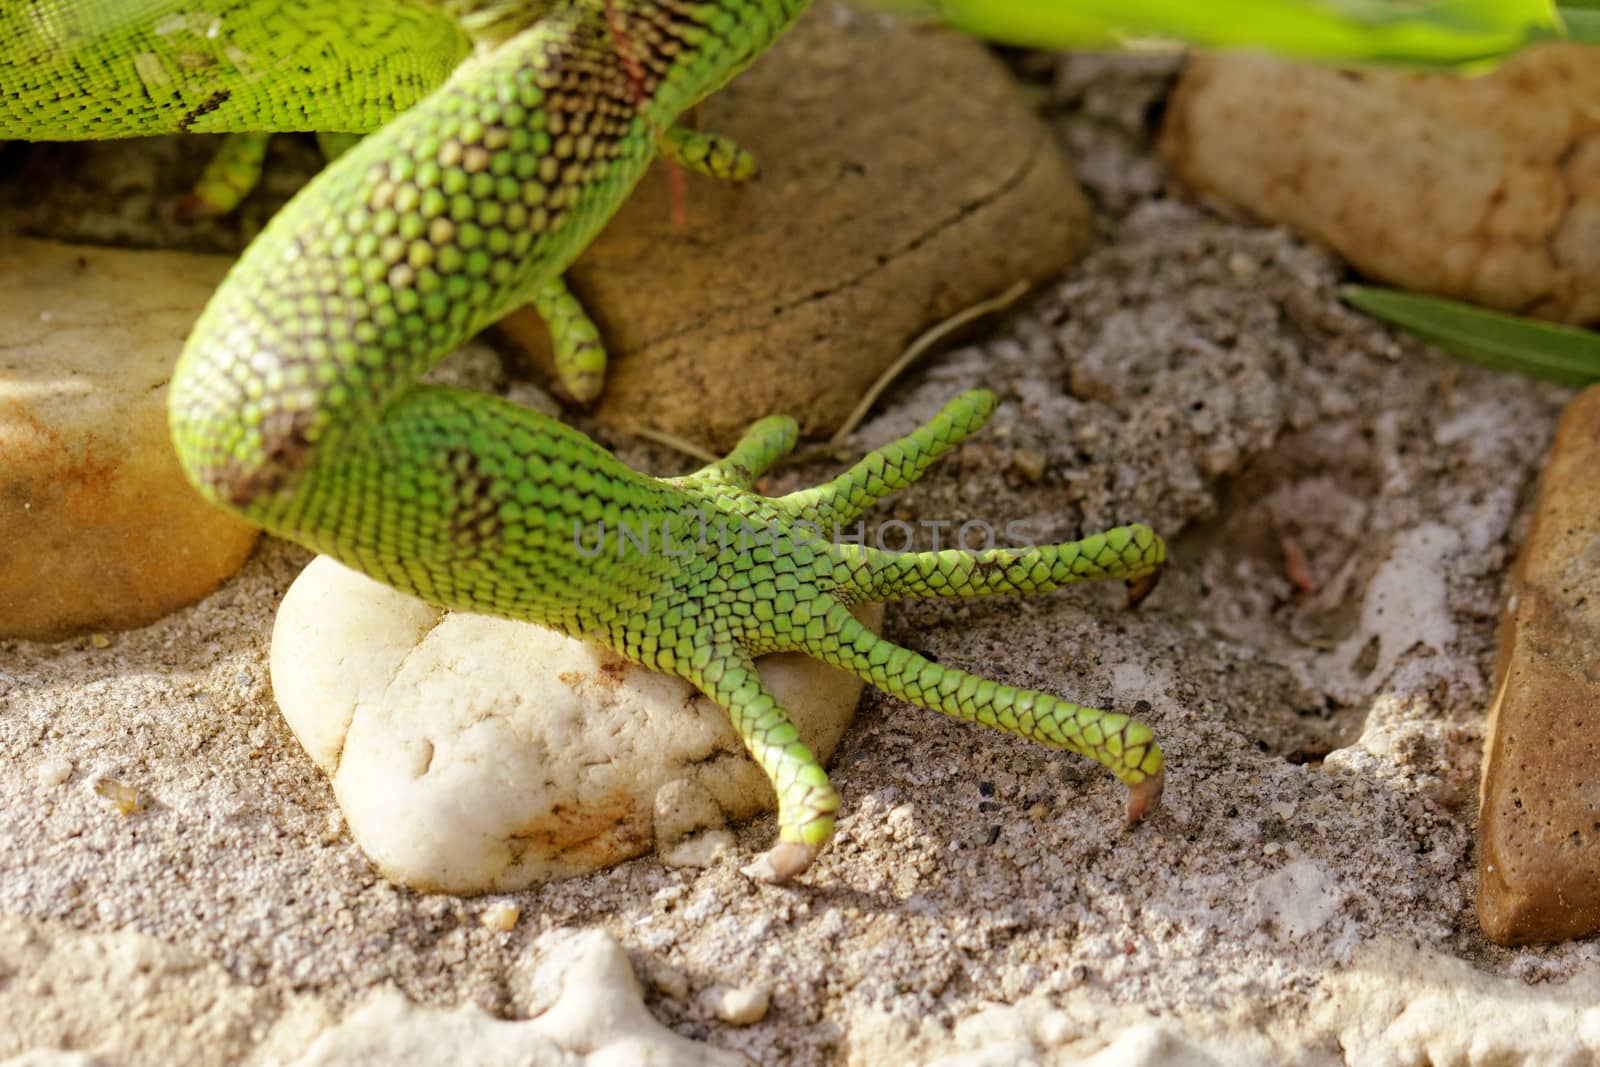 green iguana feet on the rock